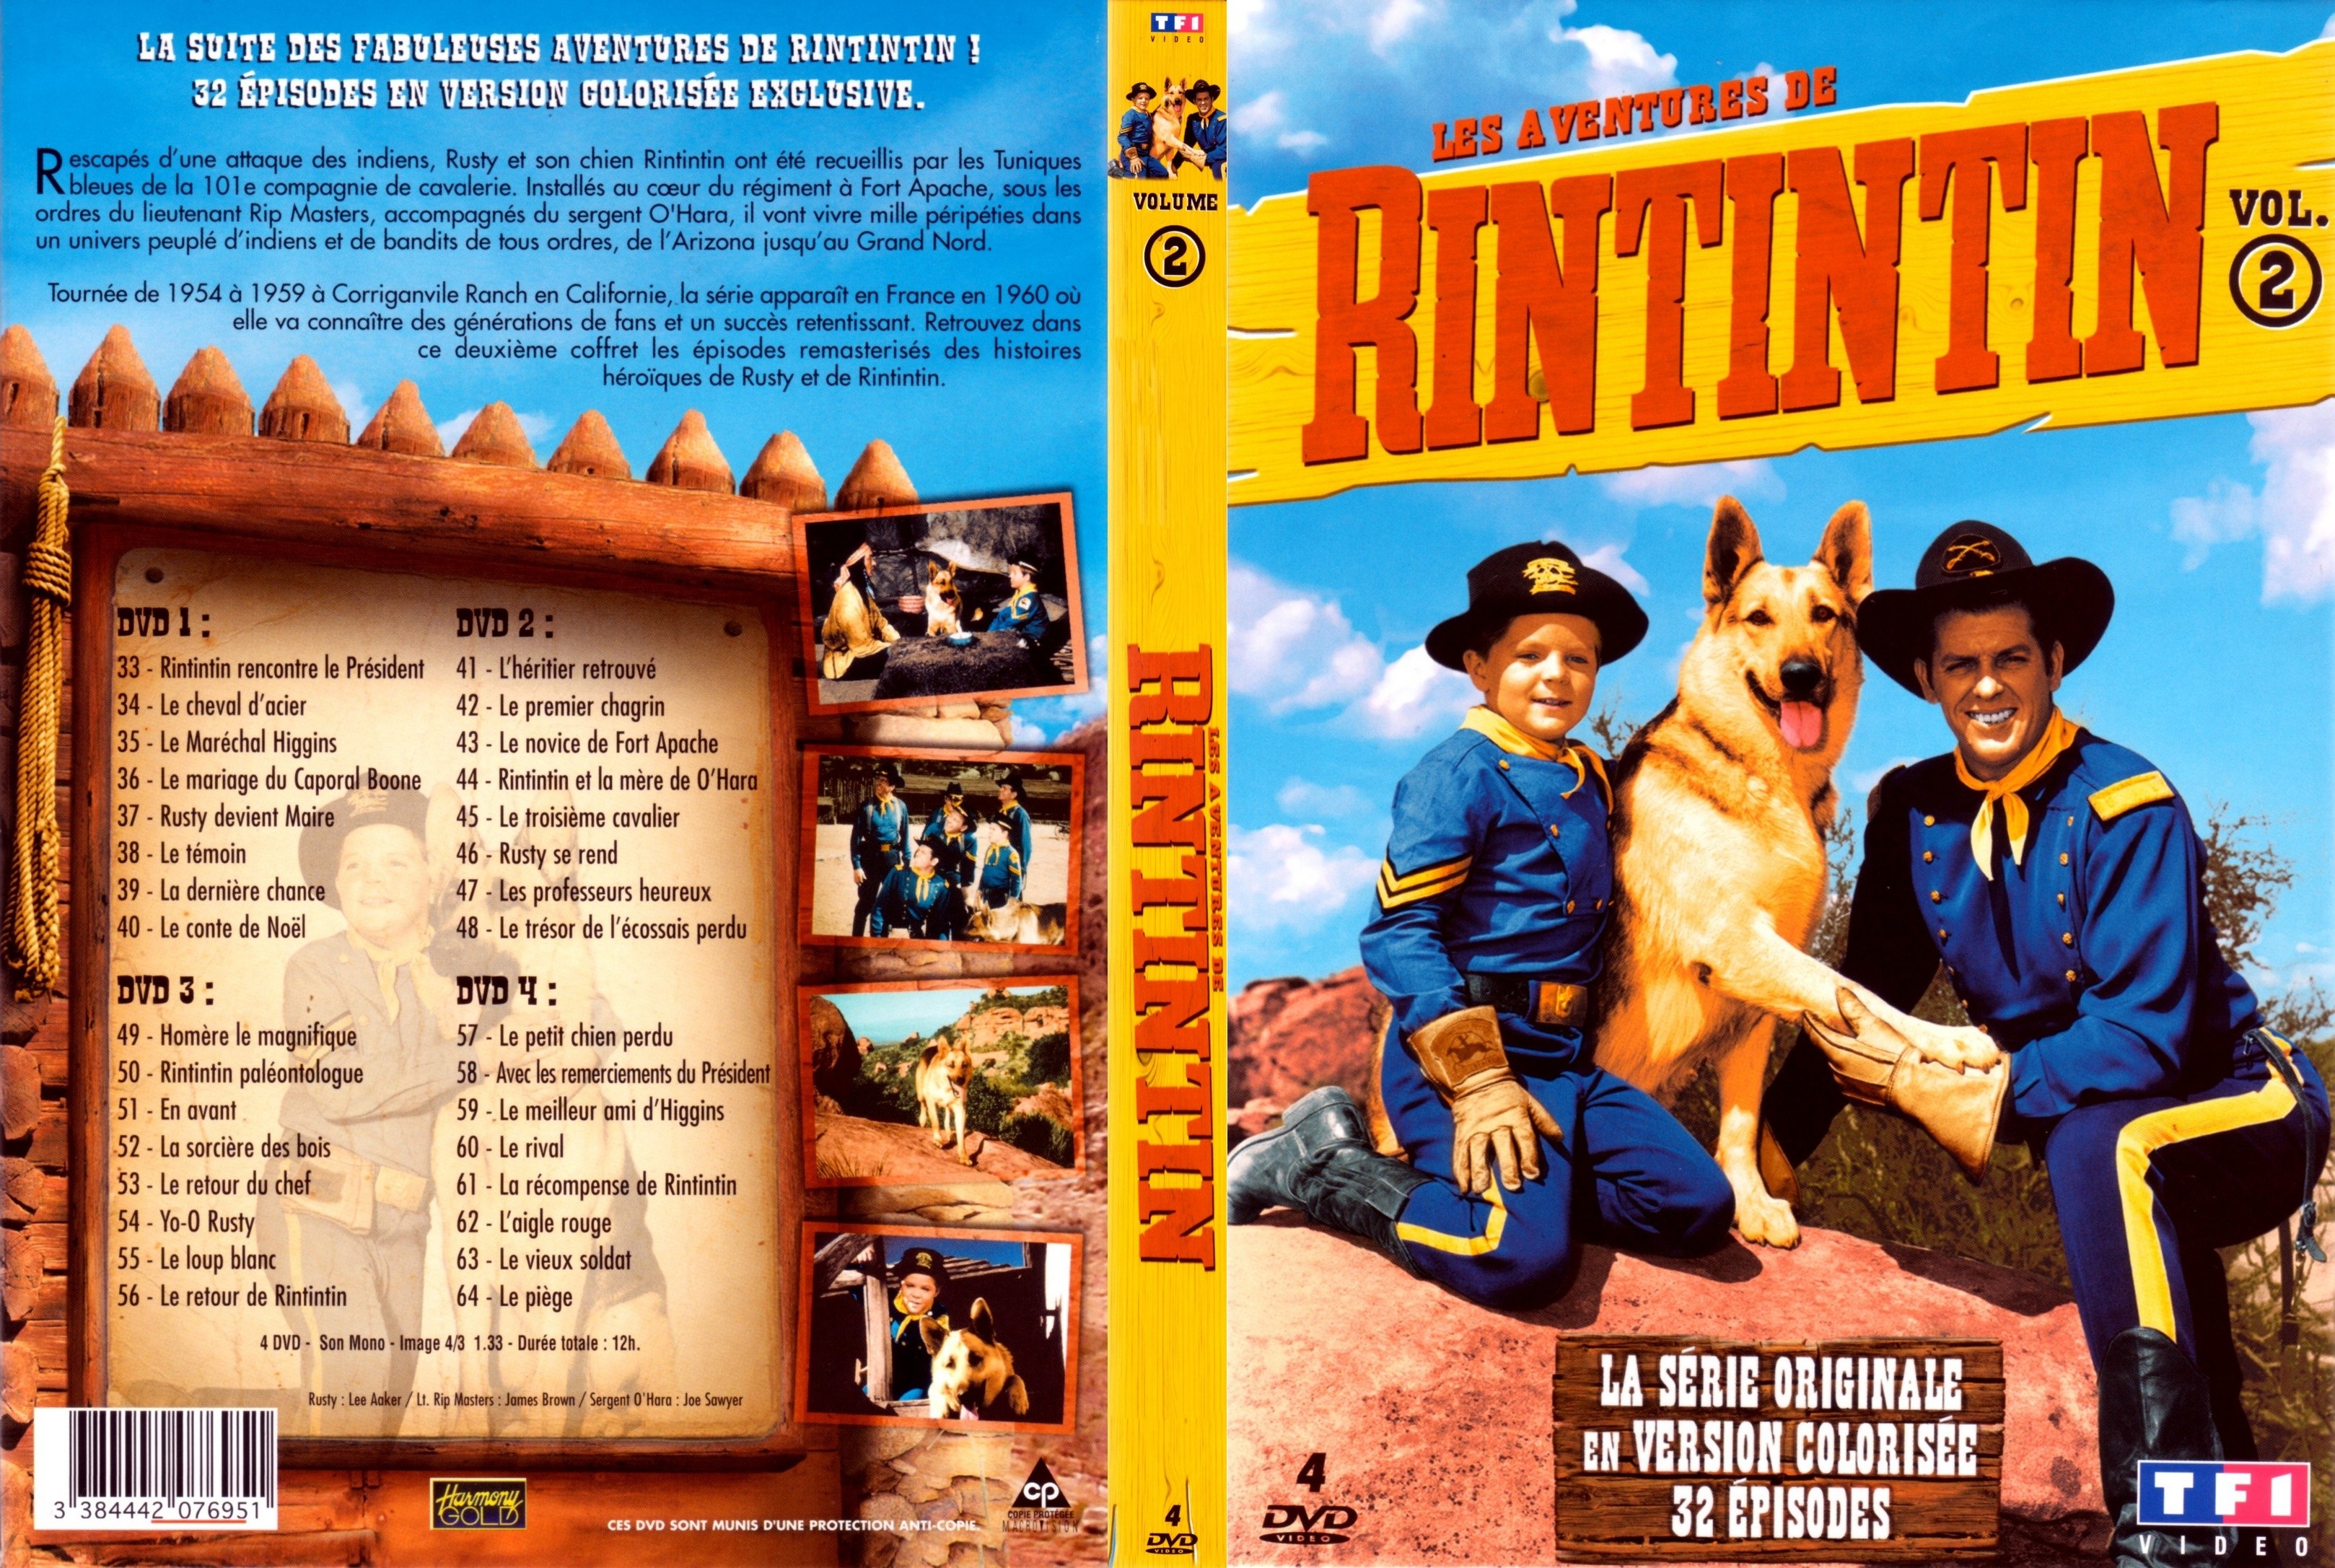 Jaquette DVD Les aventures de Rintintin vol 2 COFFRET